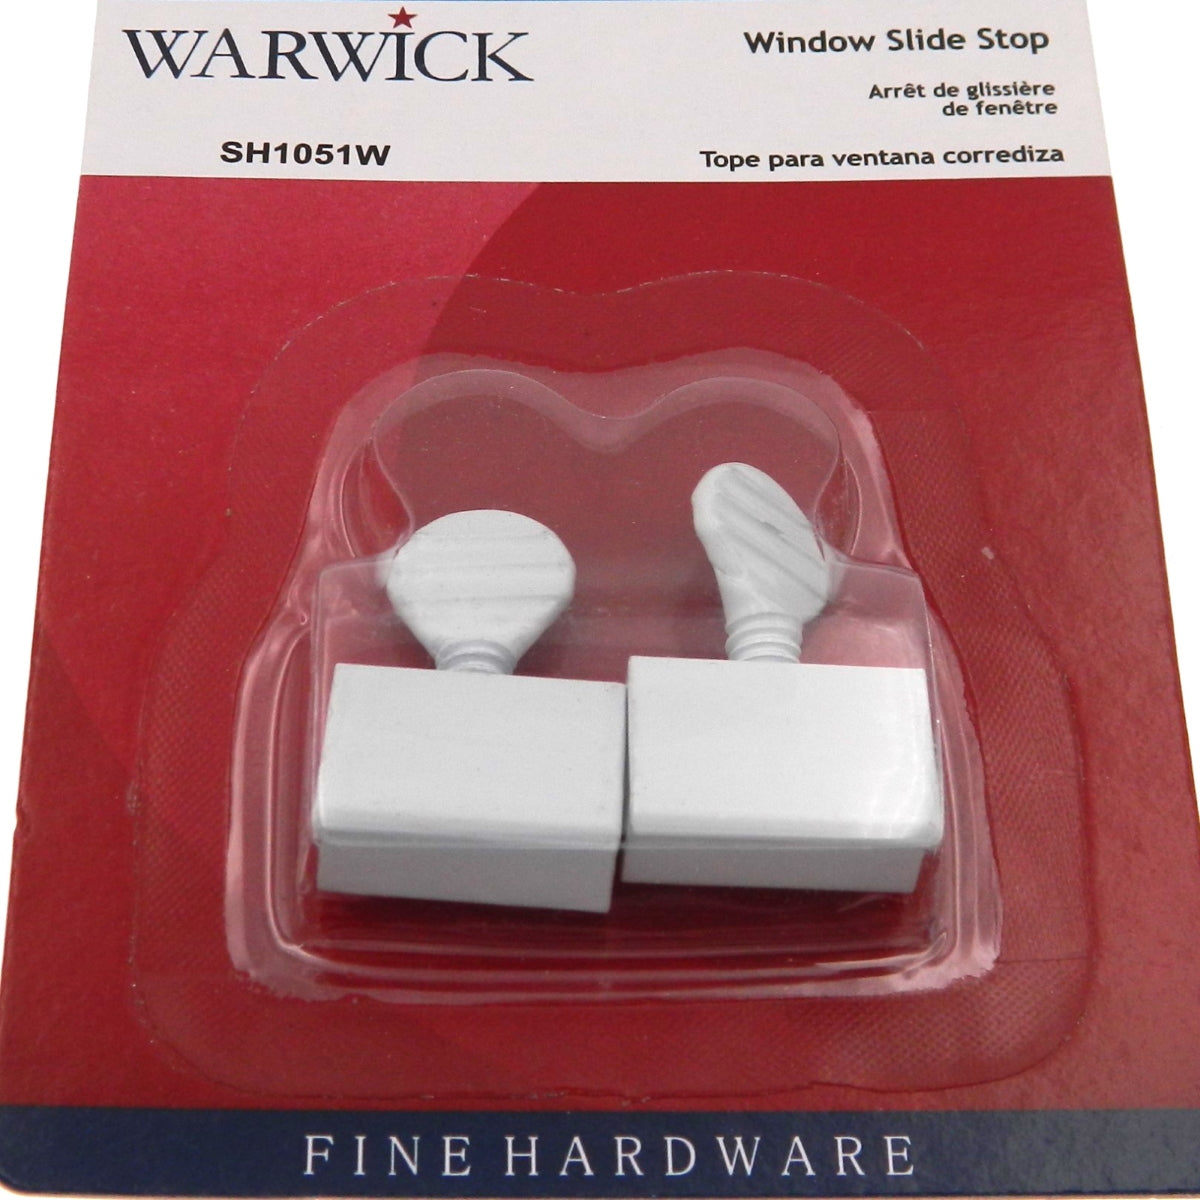 Set of Warwick Thumbscrew Window or Sliding Door Slide Stop Locks, White SH1051W